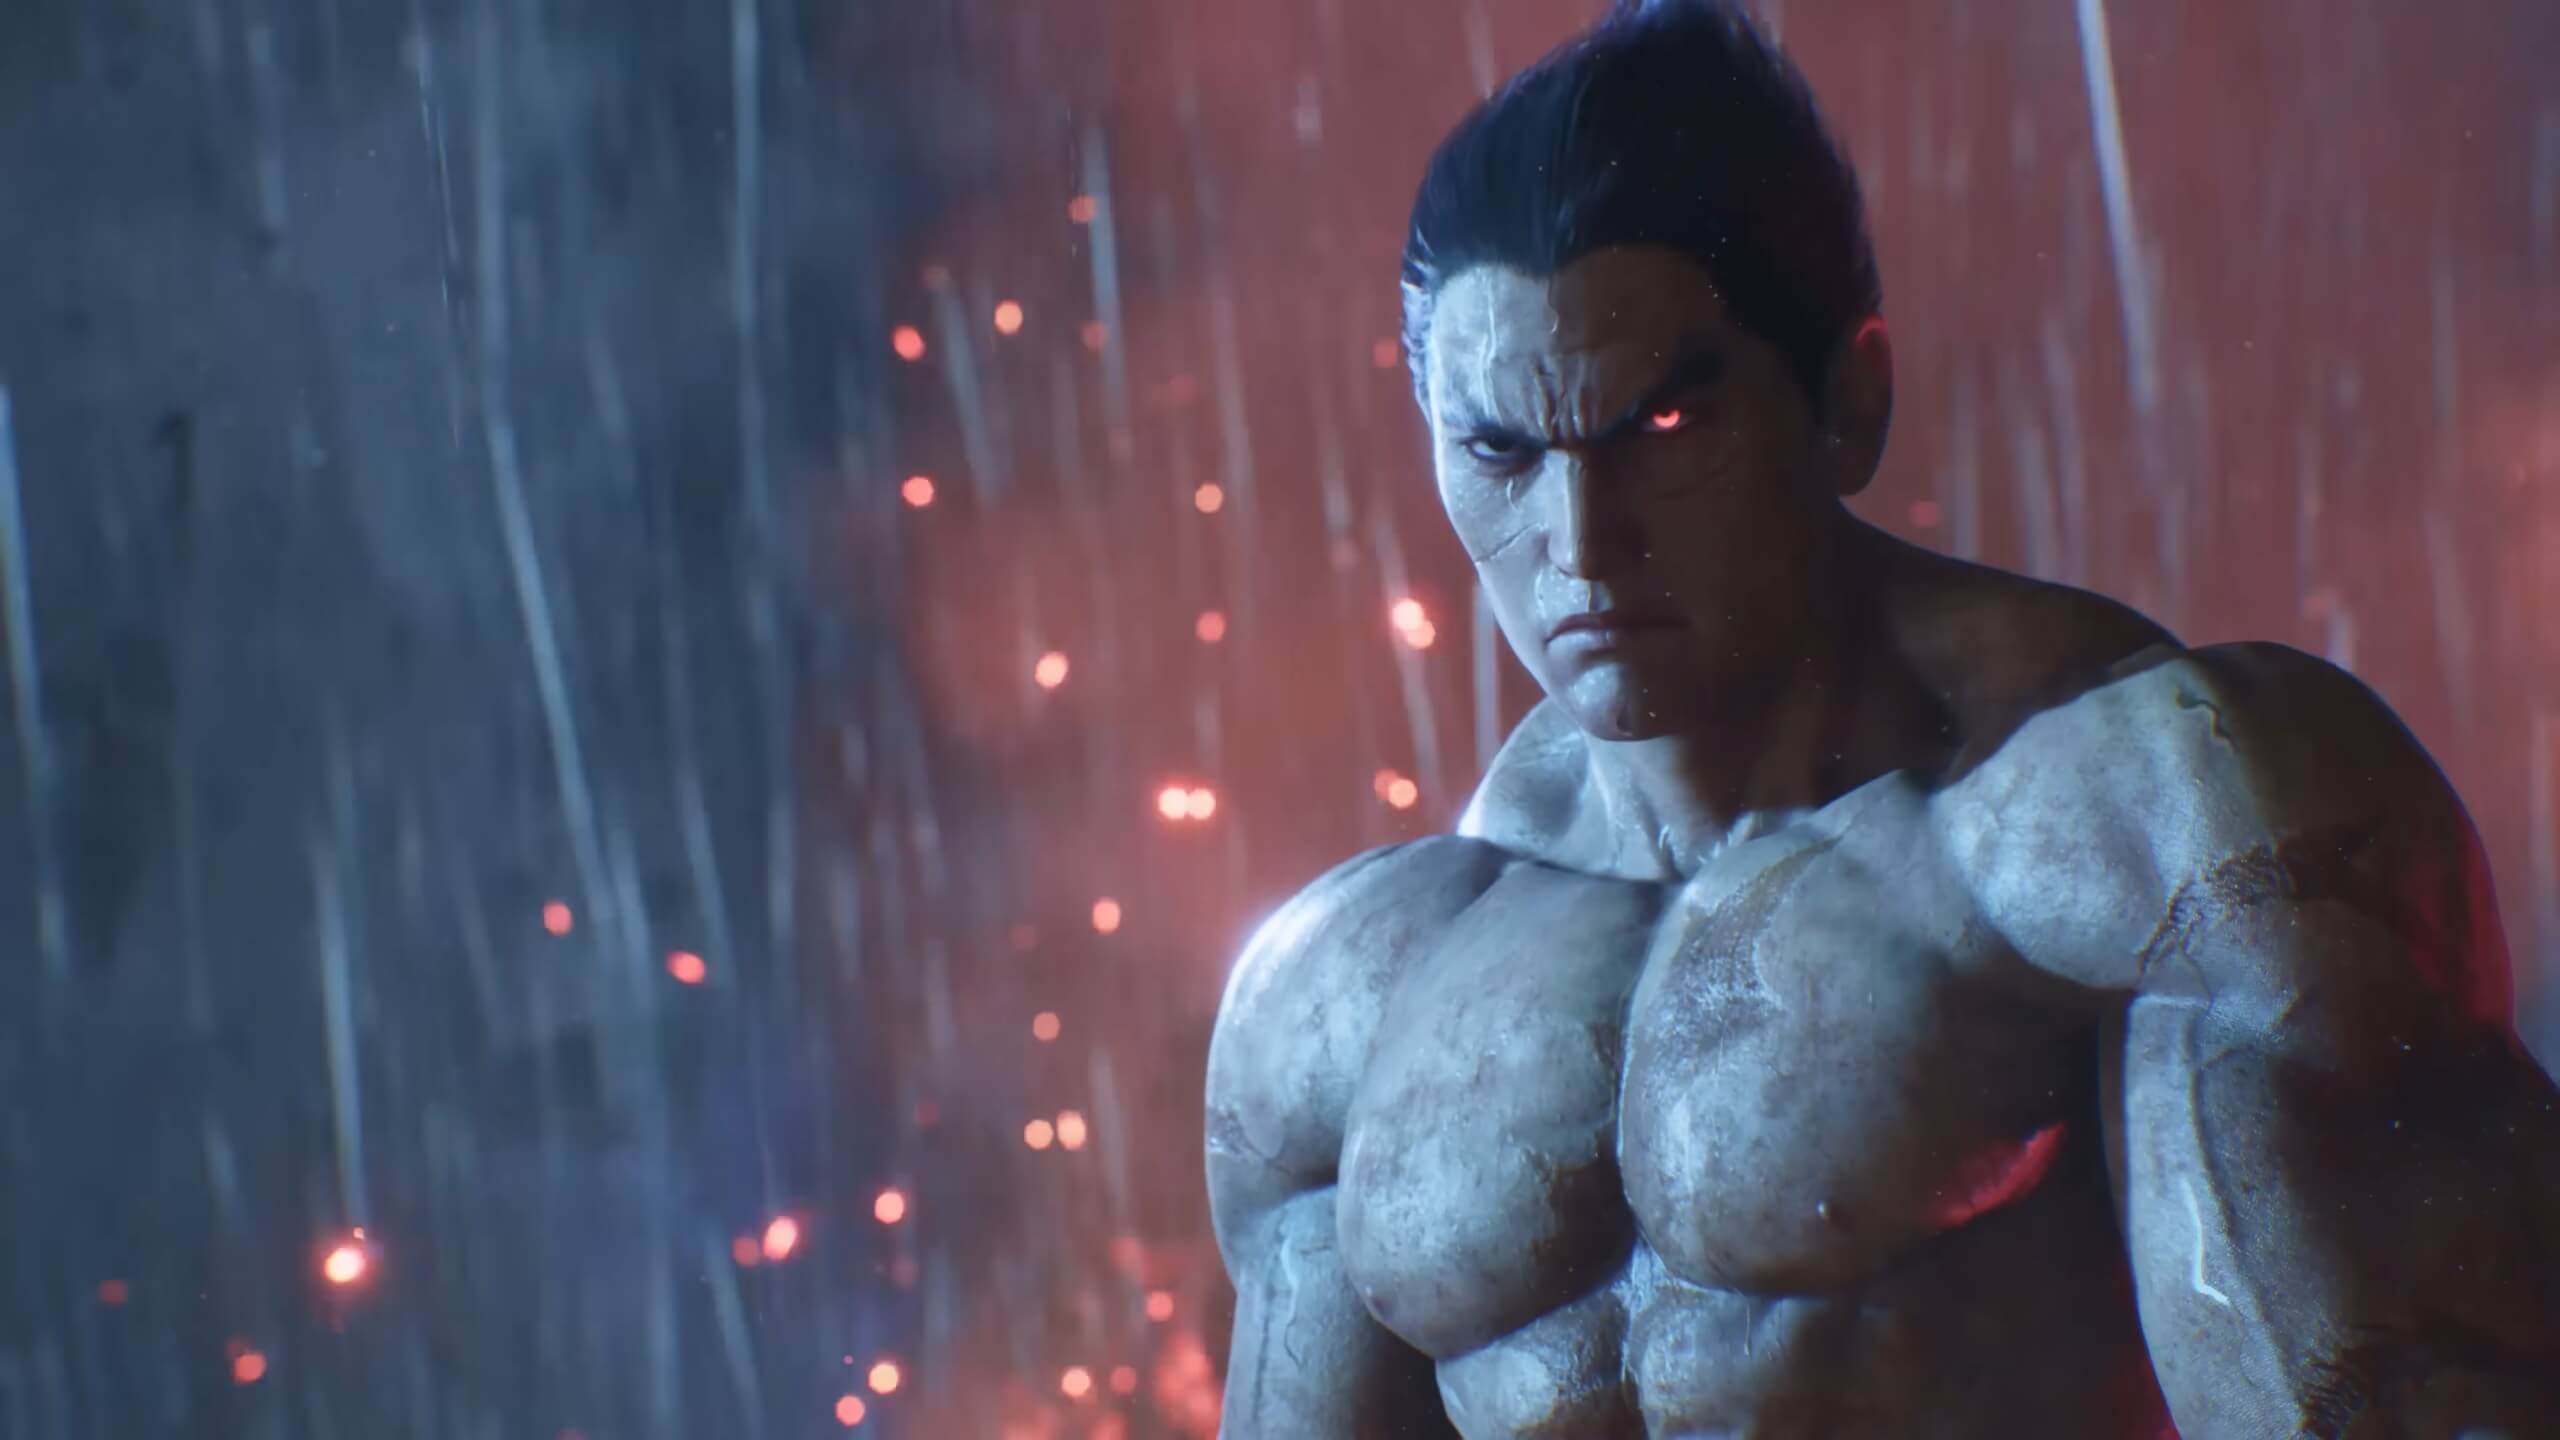 Tekken 8 shares new Kazuya gameplay trailer - Niche Gamer